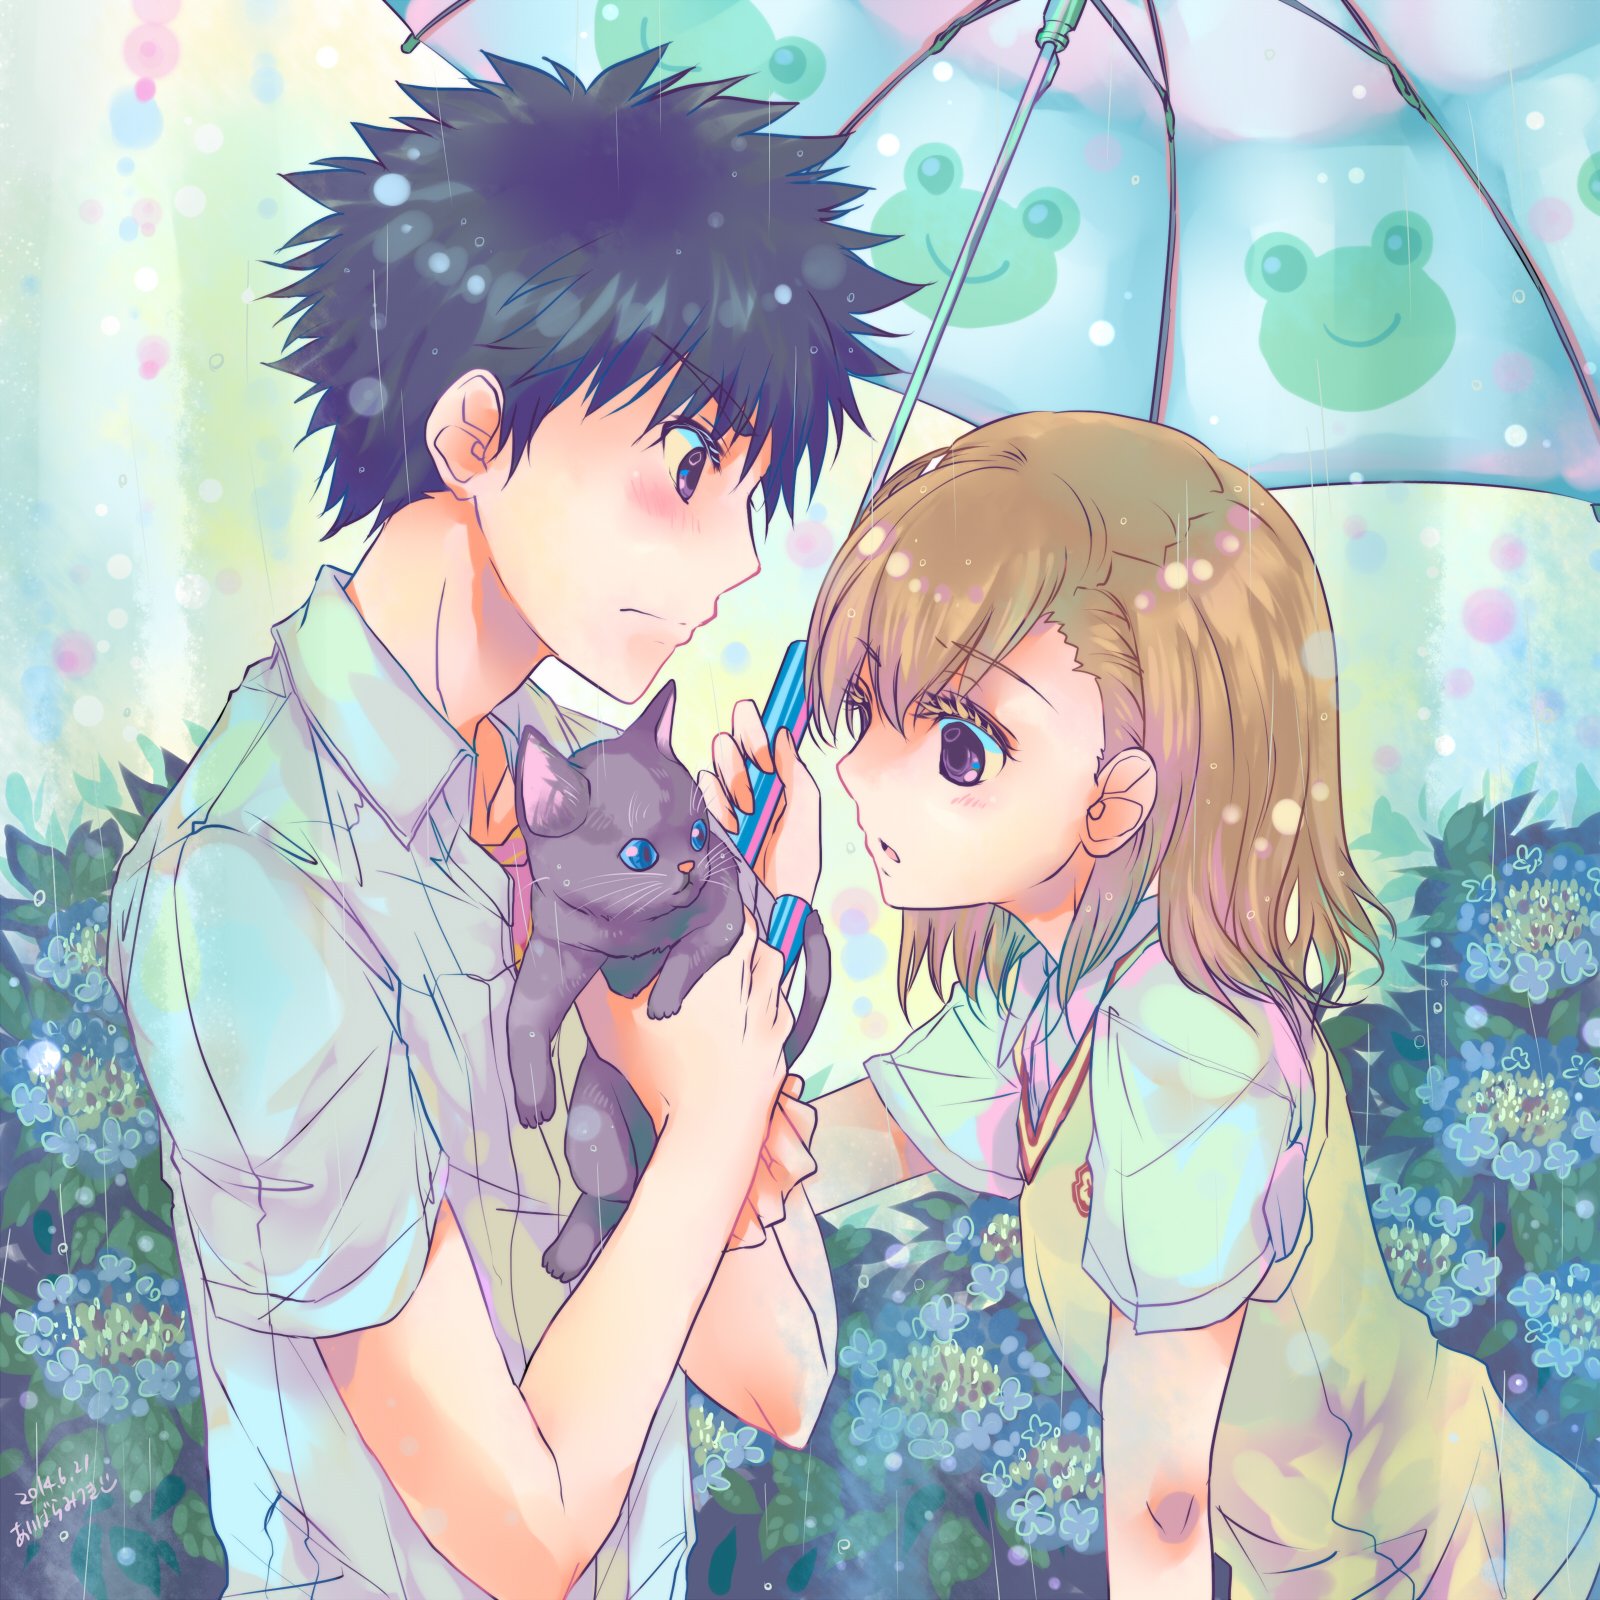 Umbrella anime couple cat cute girl boy rain love wallpapers hd desktop and mobile backgrounds